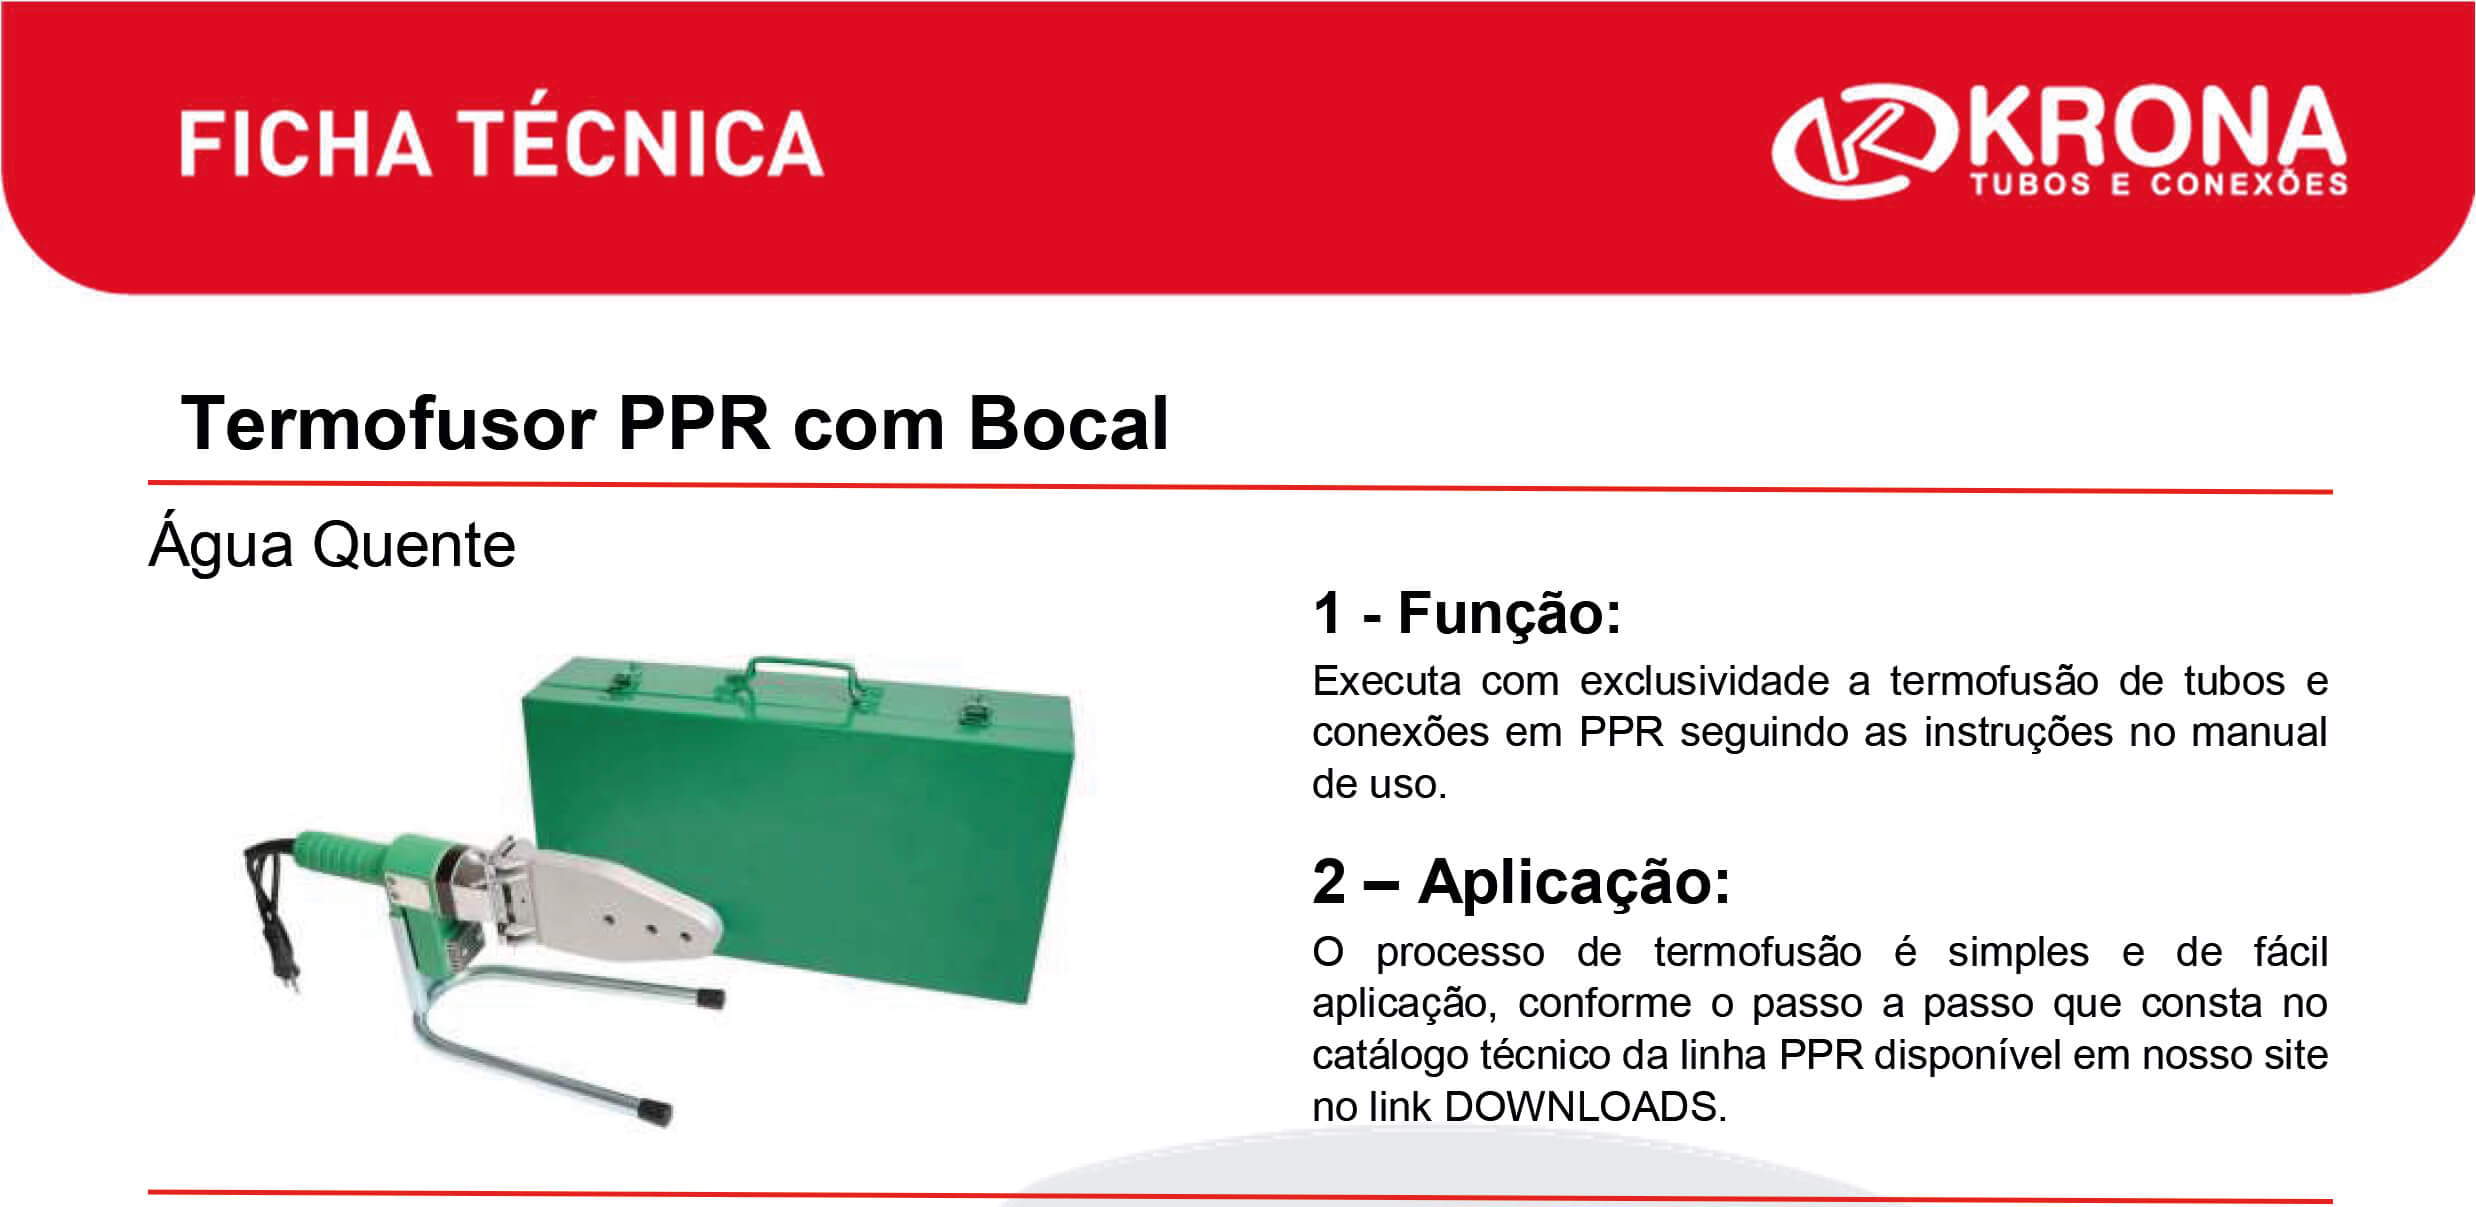 Ficha Técnica – Termofusor PPR com Bocal